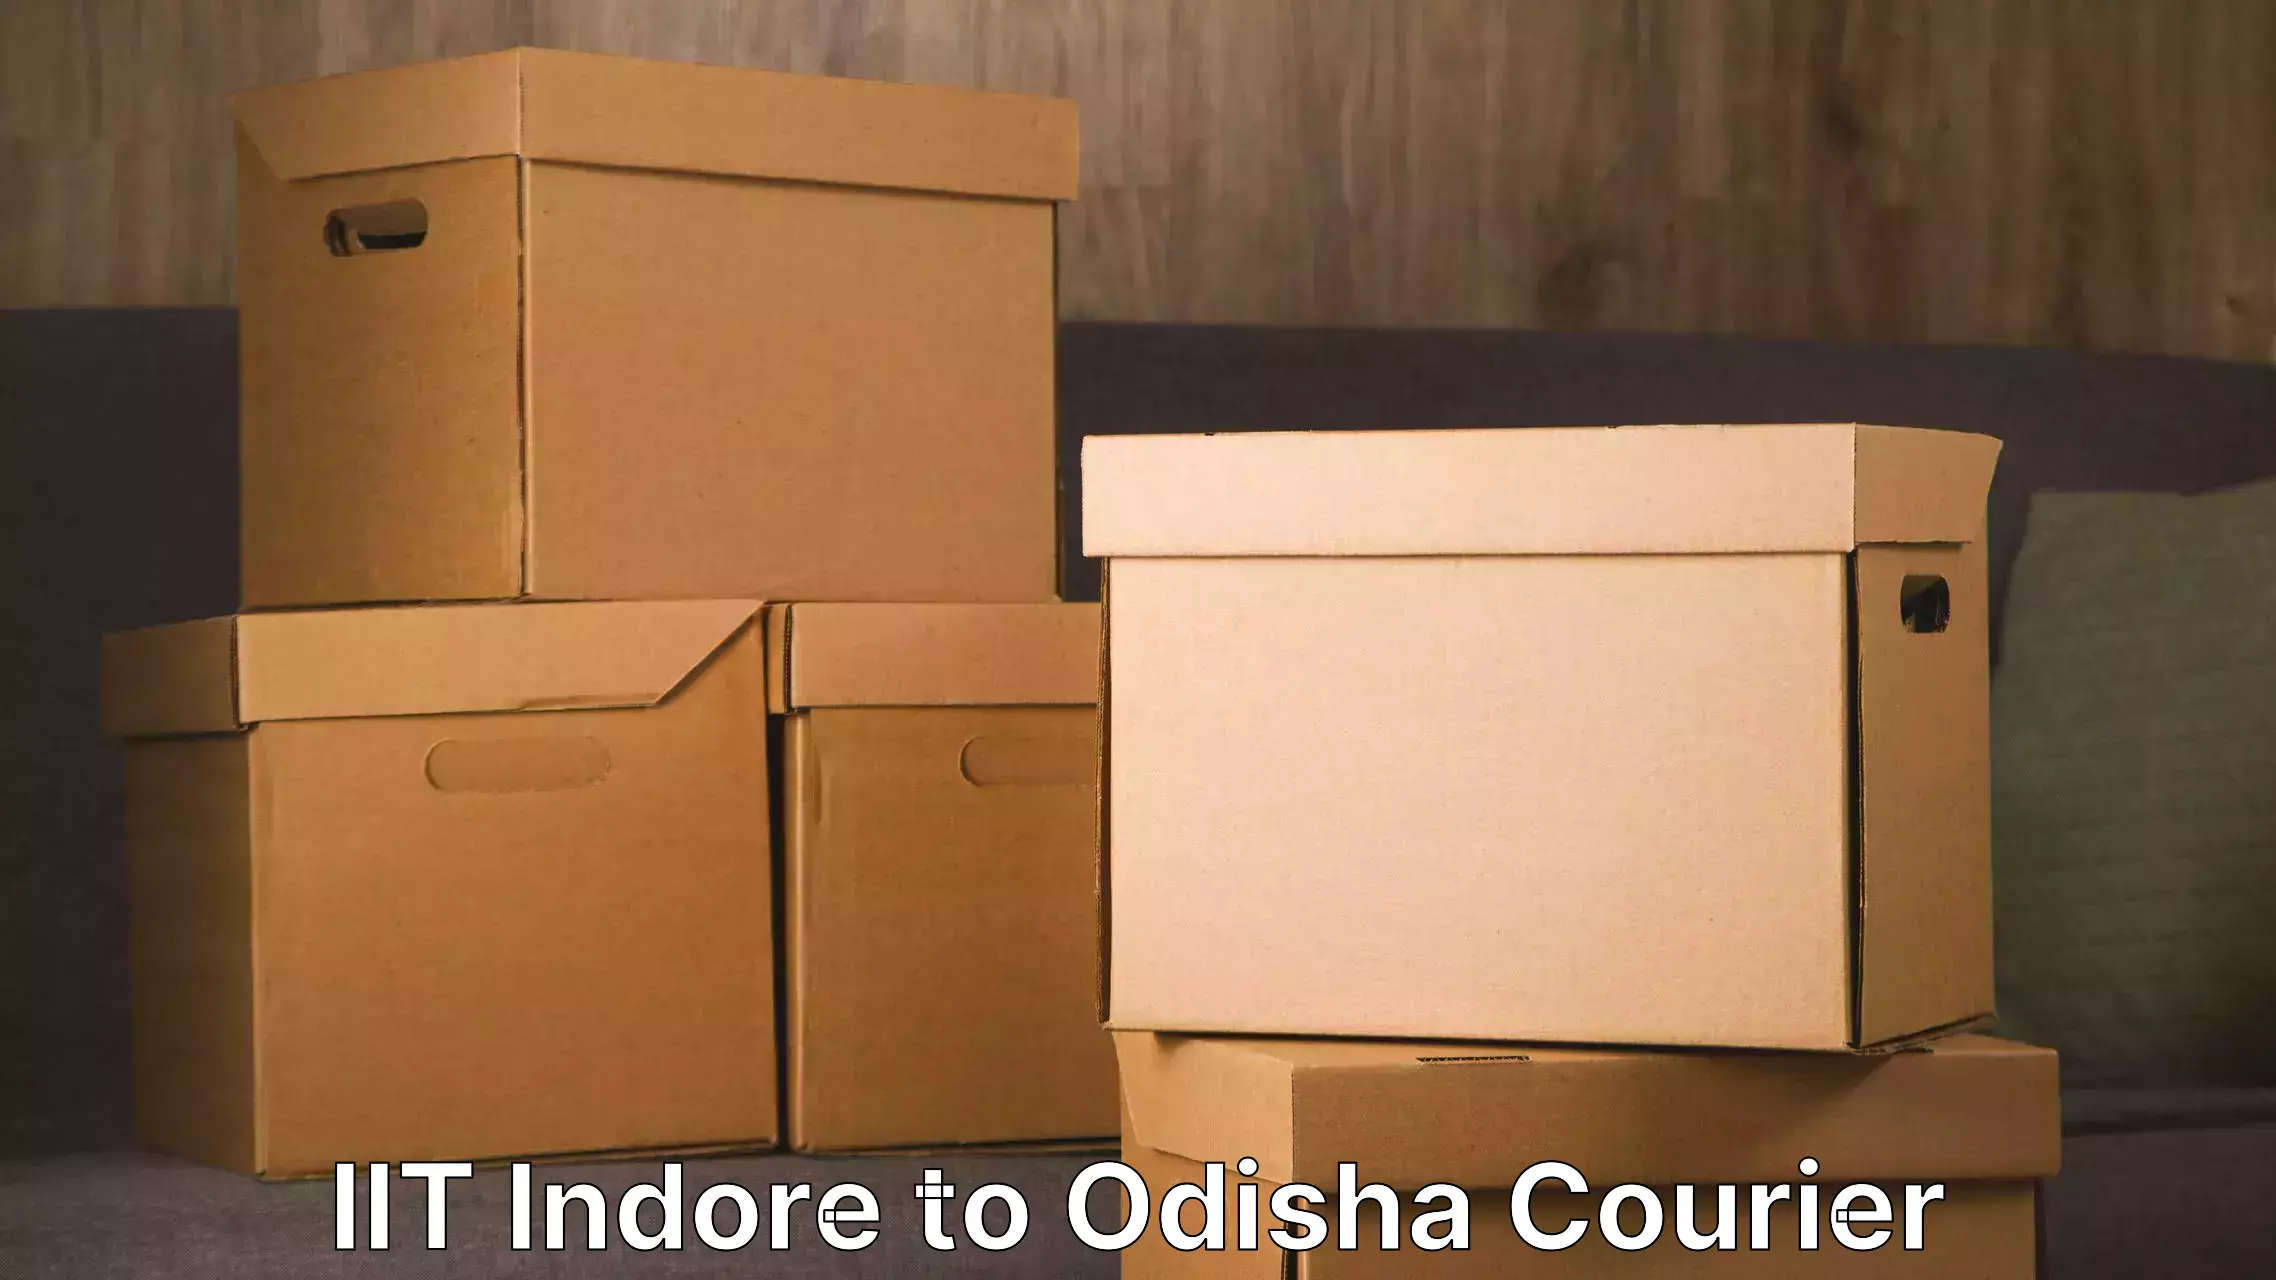 Professional moving company IIT Indore to Odisha